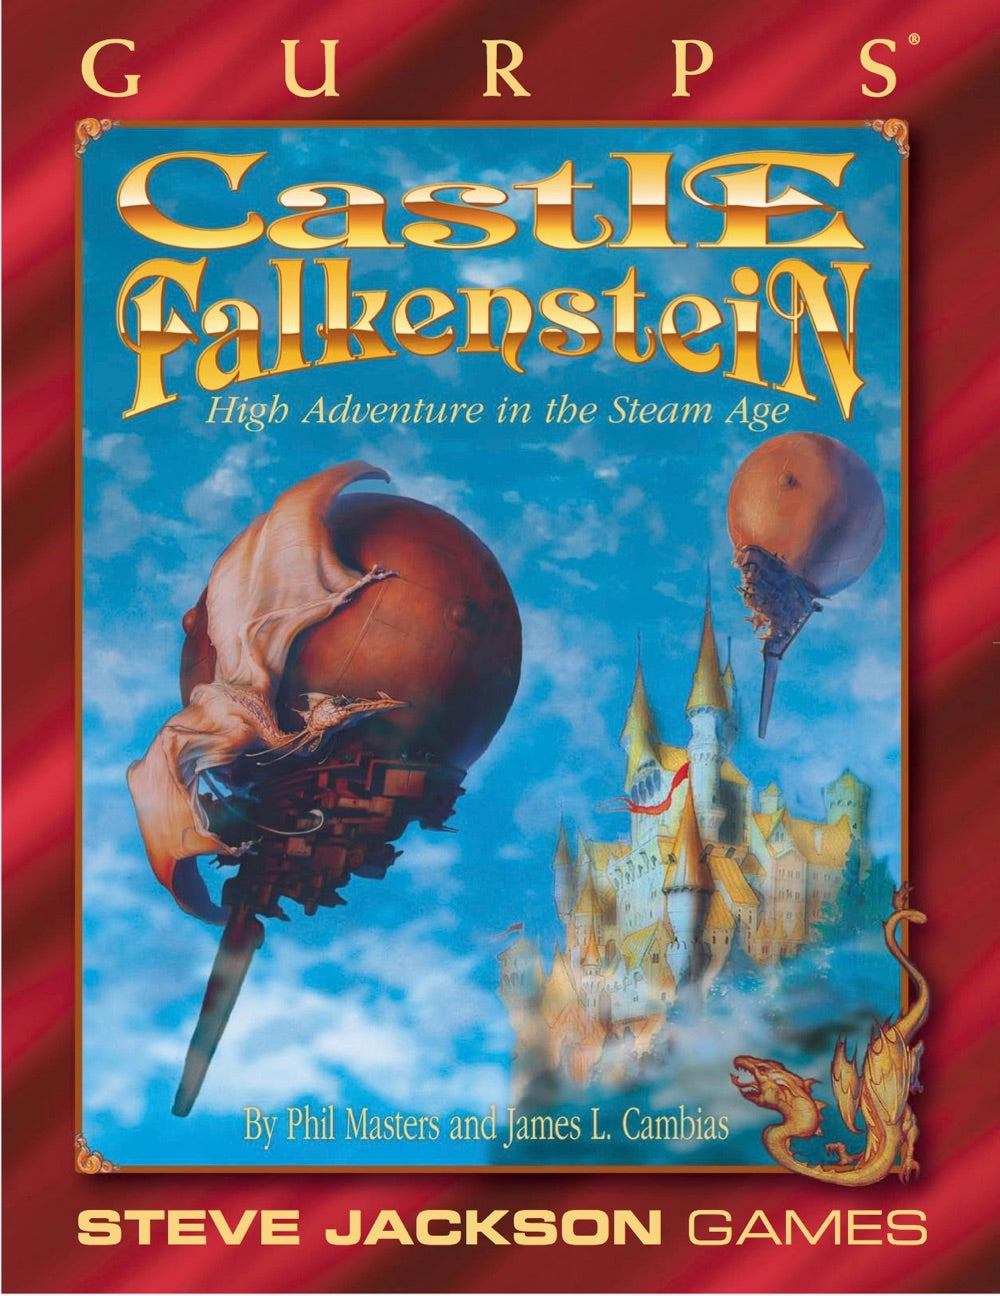 GURPS Classic: Castle Falkenstein